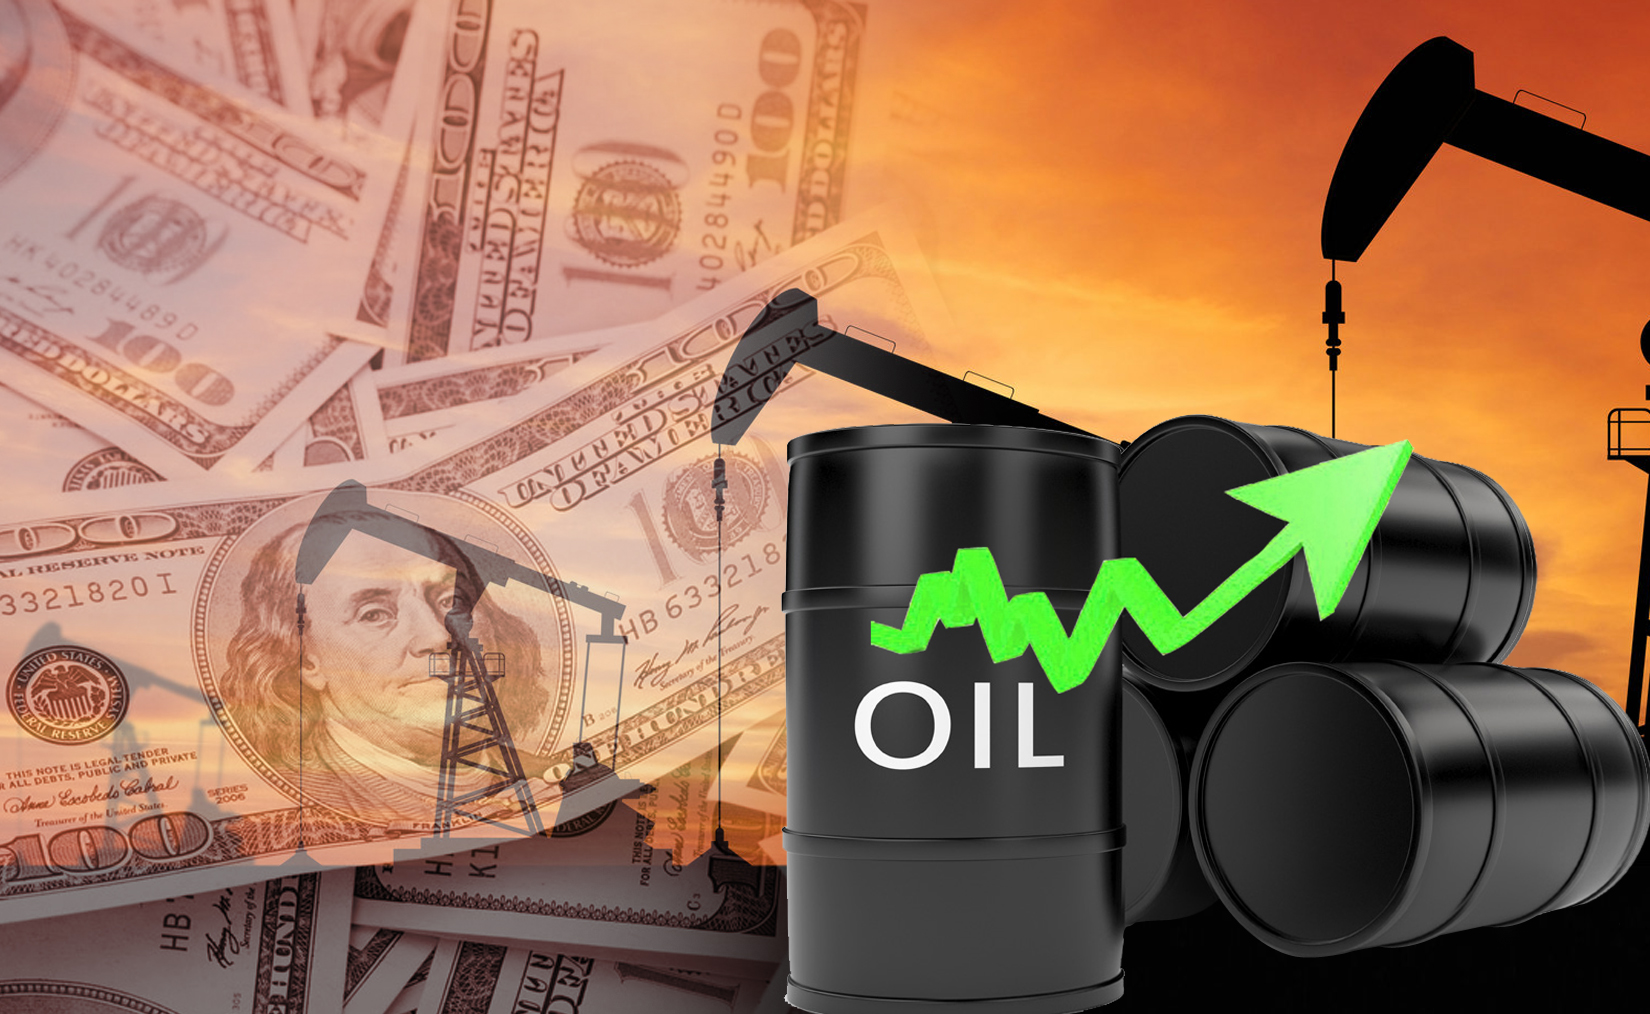 Kuwait oil price up 1.99 cents to USD 41.89 pb - KPC                                                                                                                                                                                                      